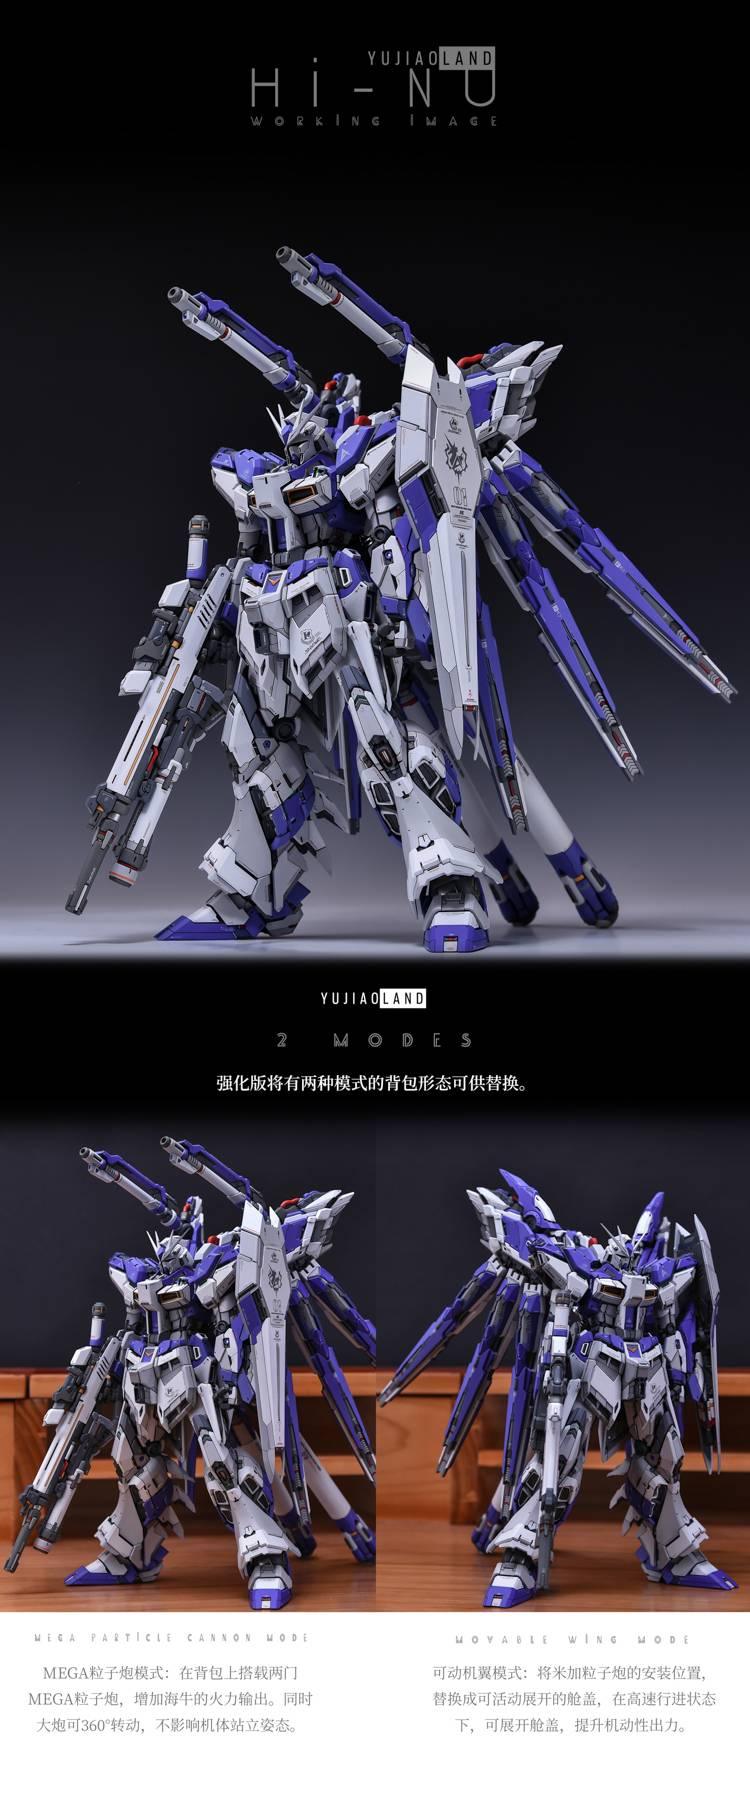 Yujiao Land MG Hi-v ver.Ka GK parts - Gundam Extra-Your BEST Gunpla Supplier